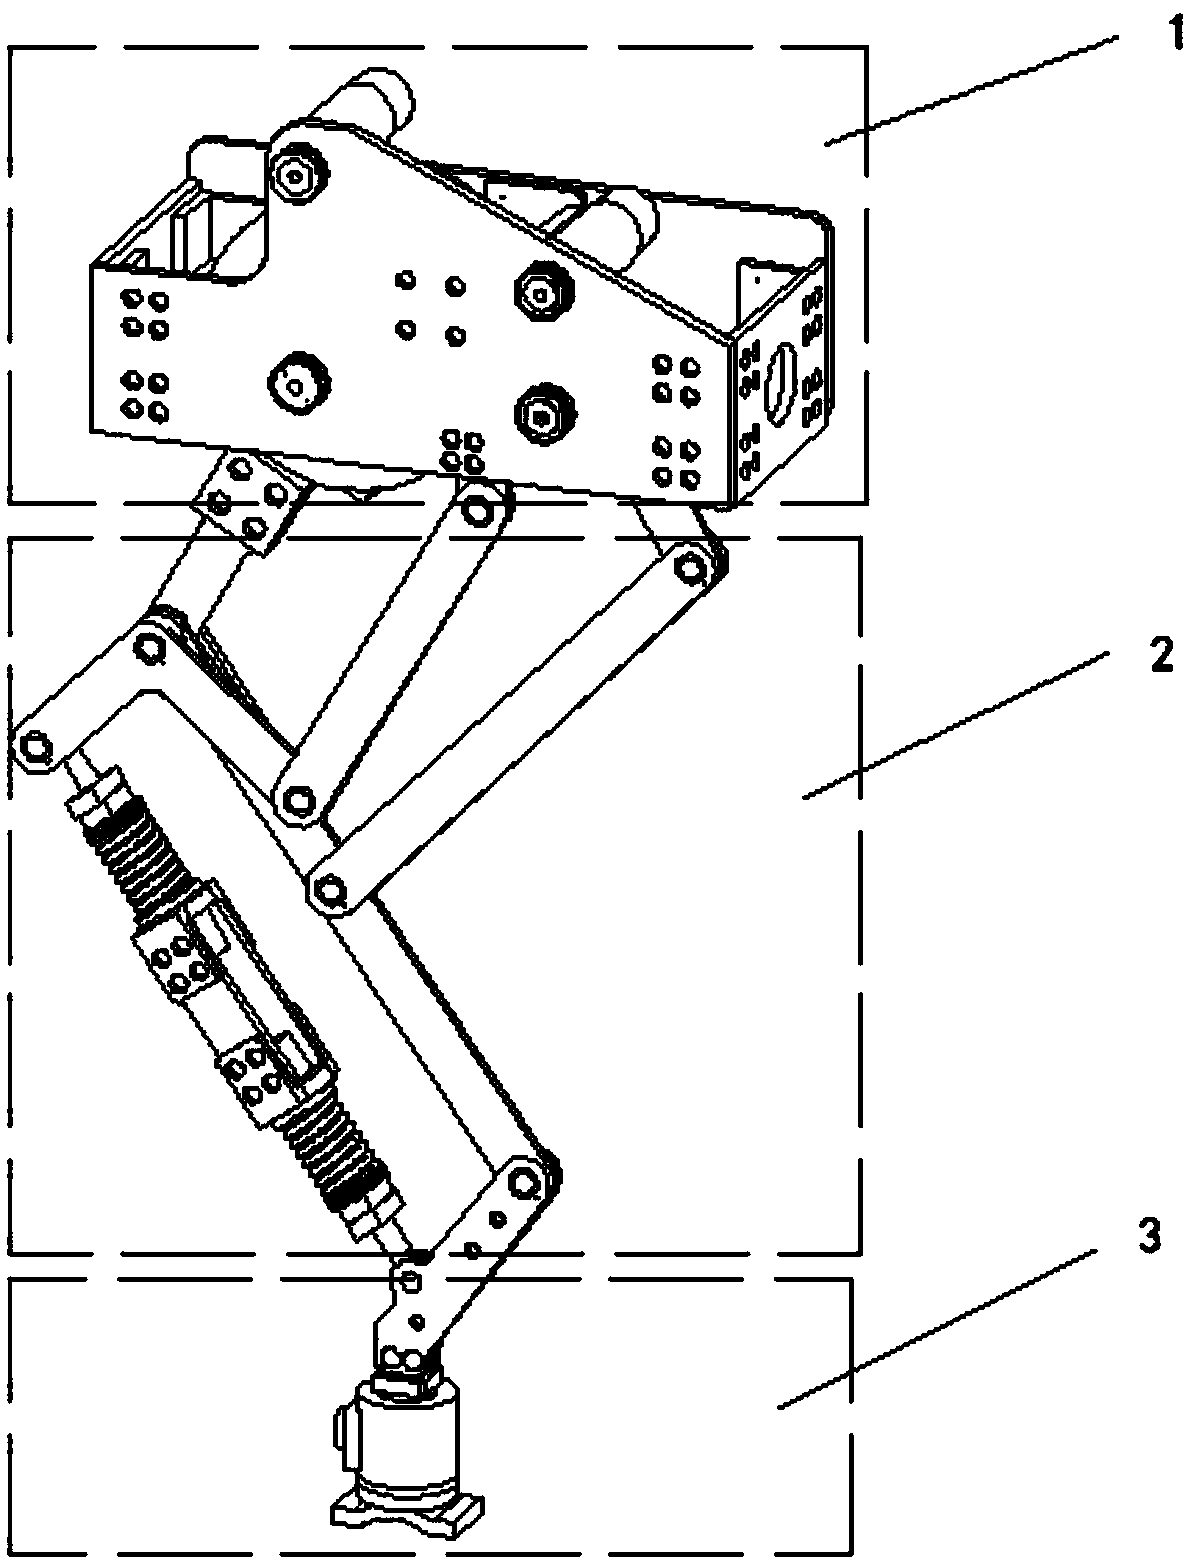 A quadruped robot platform